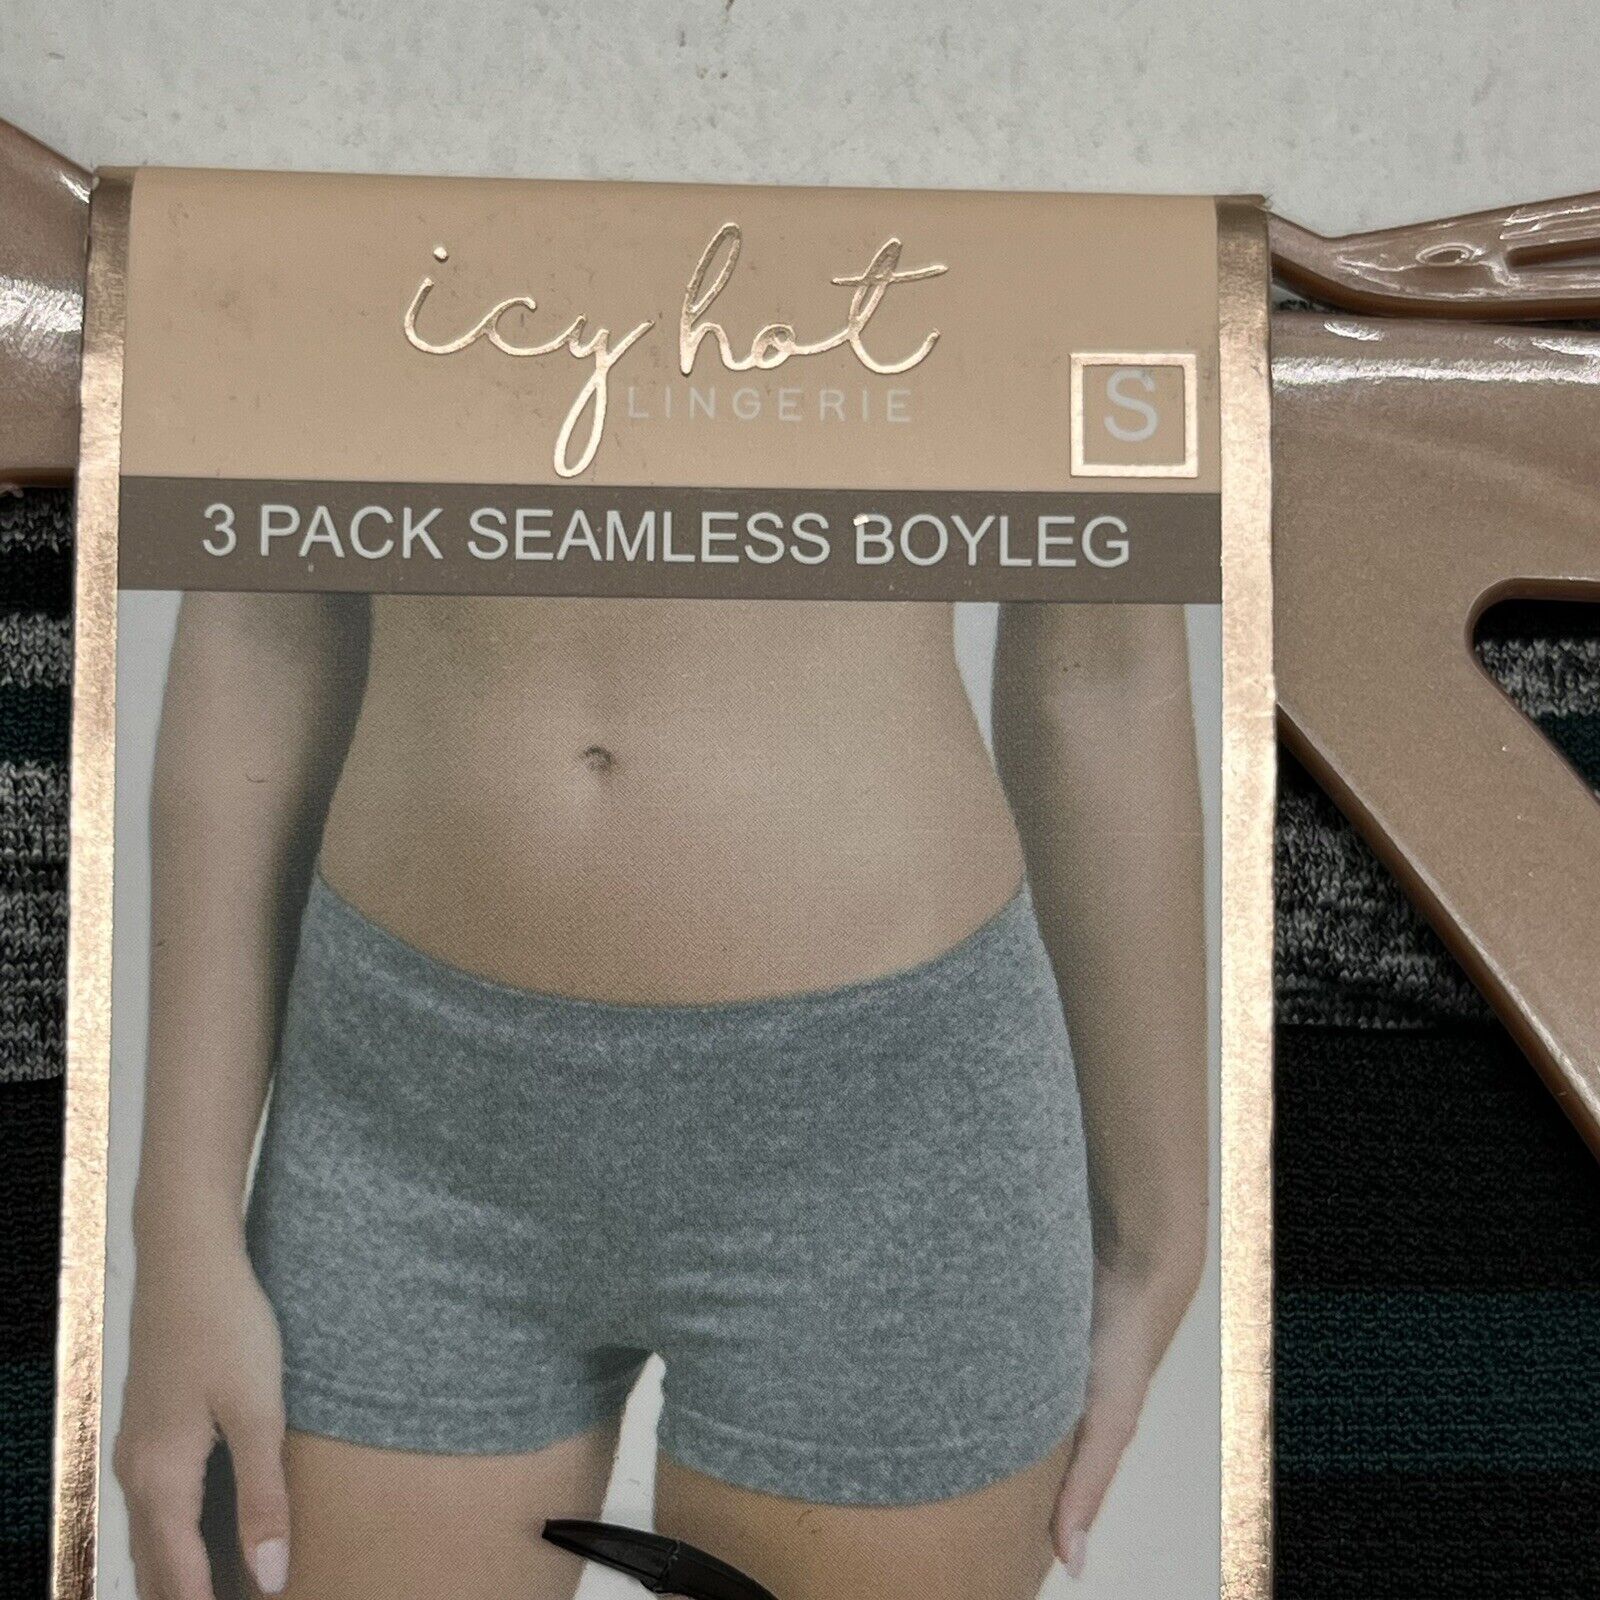 Icy Hot Lingerie 3 Pack Seamless Boyleg Underwear Women's Size Small N -  beyond exchange